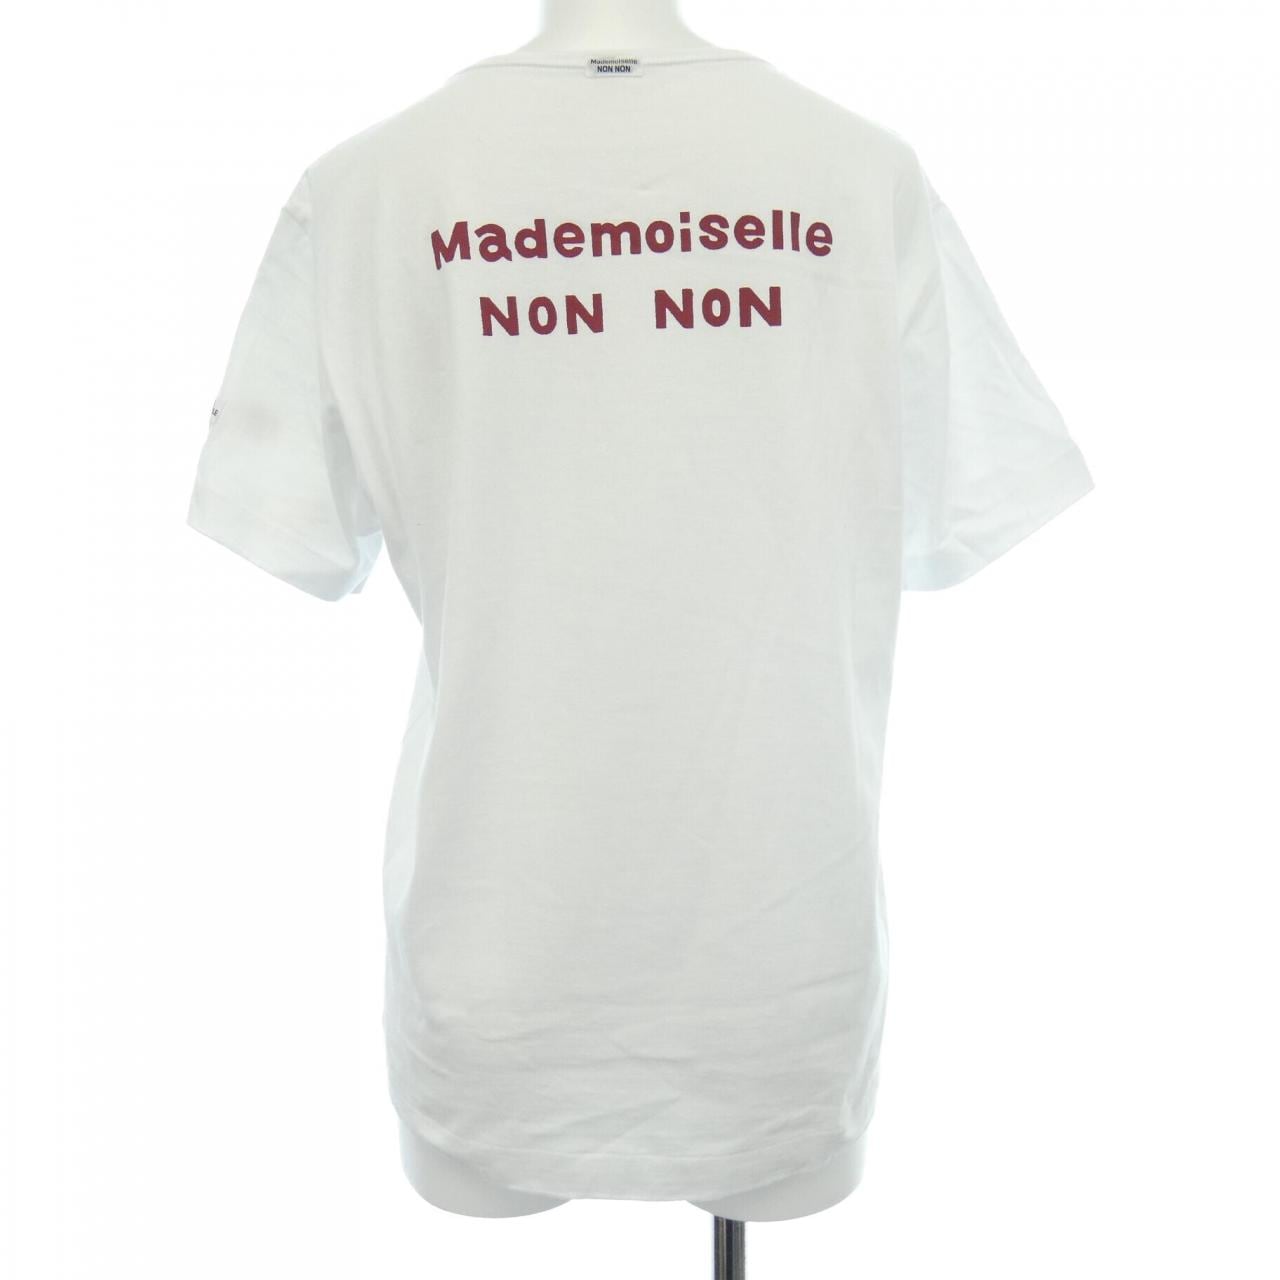 Mademoiselle Nonnon T-shirt